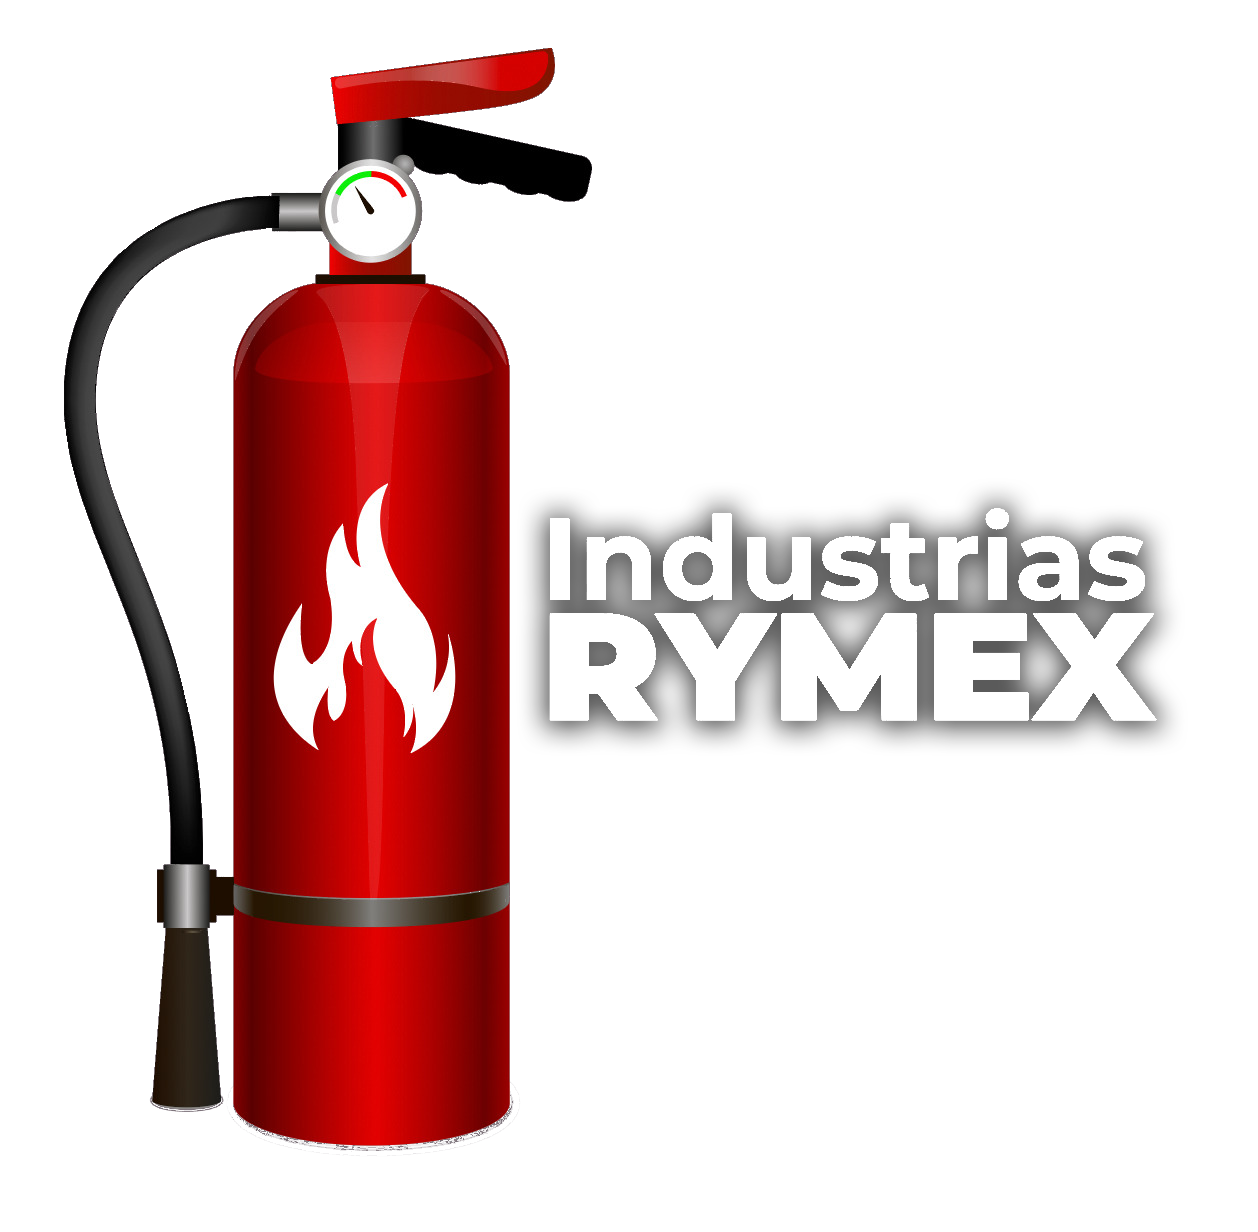 Industrias Rymex